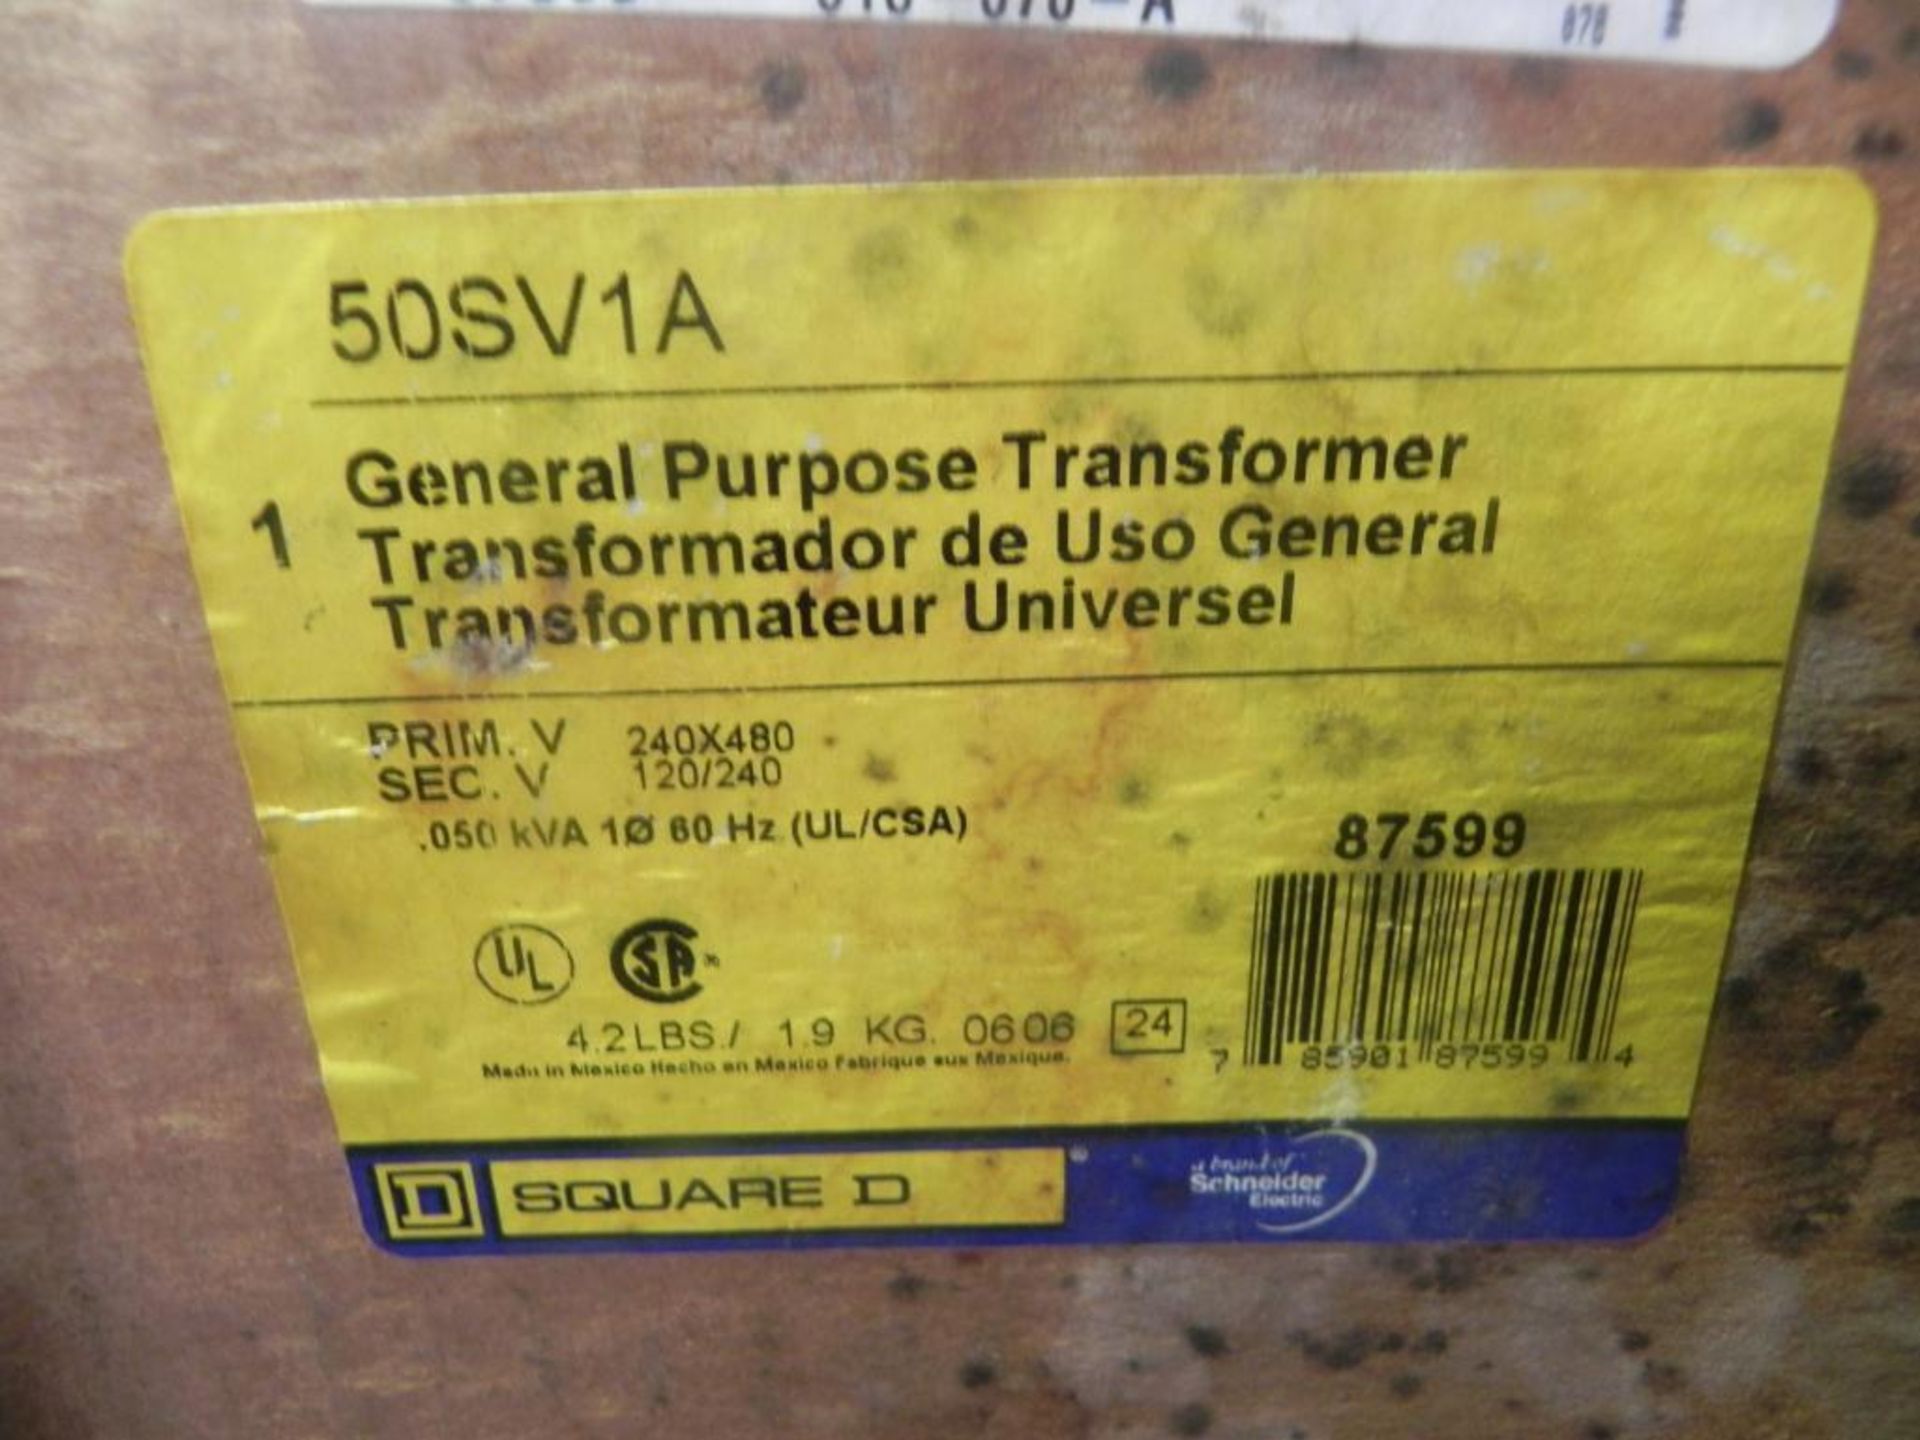 Square D General Purpose Transformer mdl 50 5V1A 0.50 KVA Phase 1 Frequency: 60HZ Ins Class 105 Deg - Bild 3 aus 6